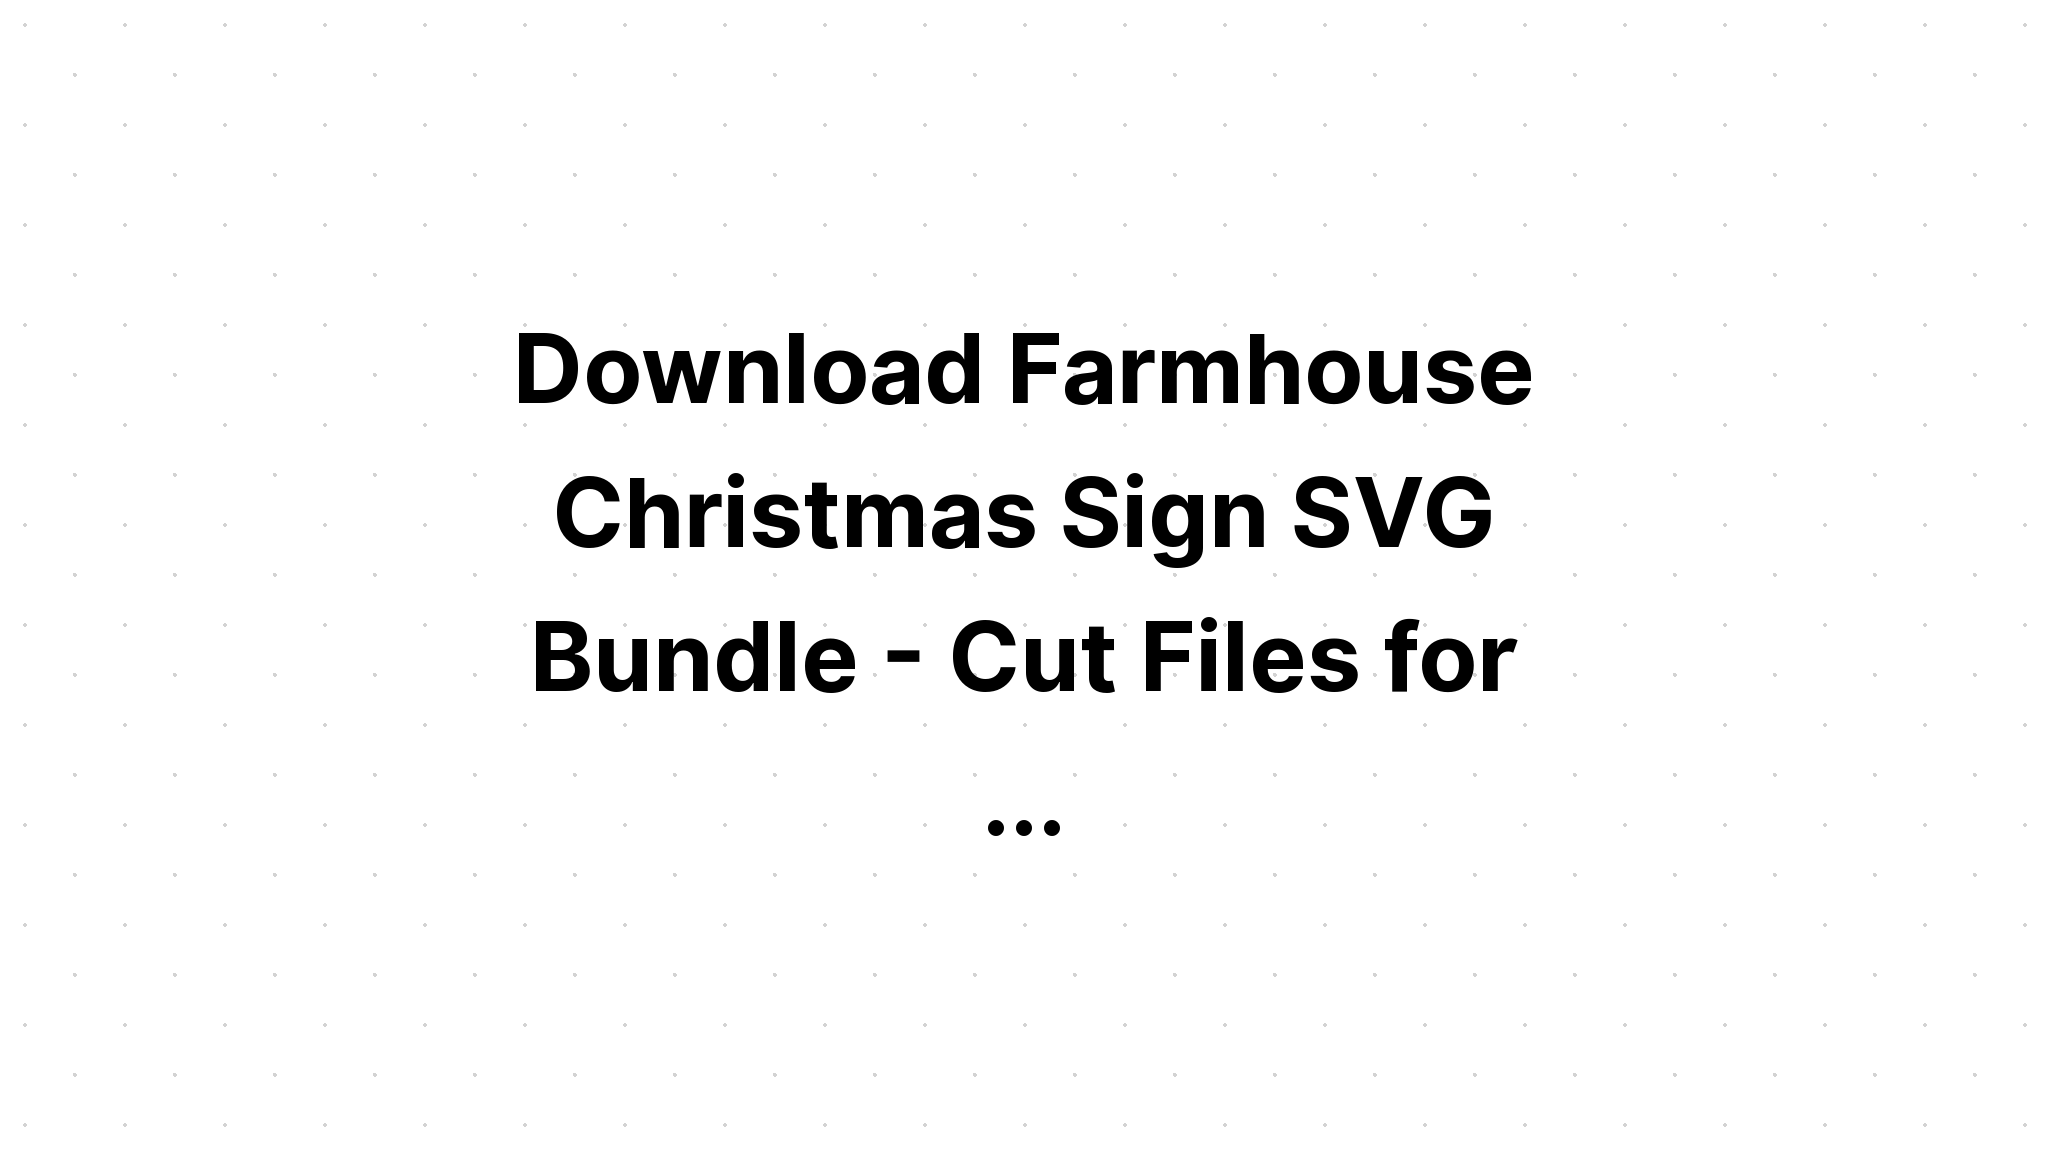 Download Christmas Farmhouse Bundle Svg Design SVG File